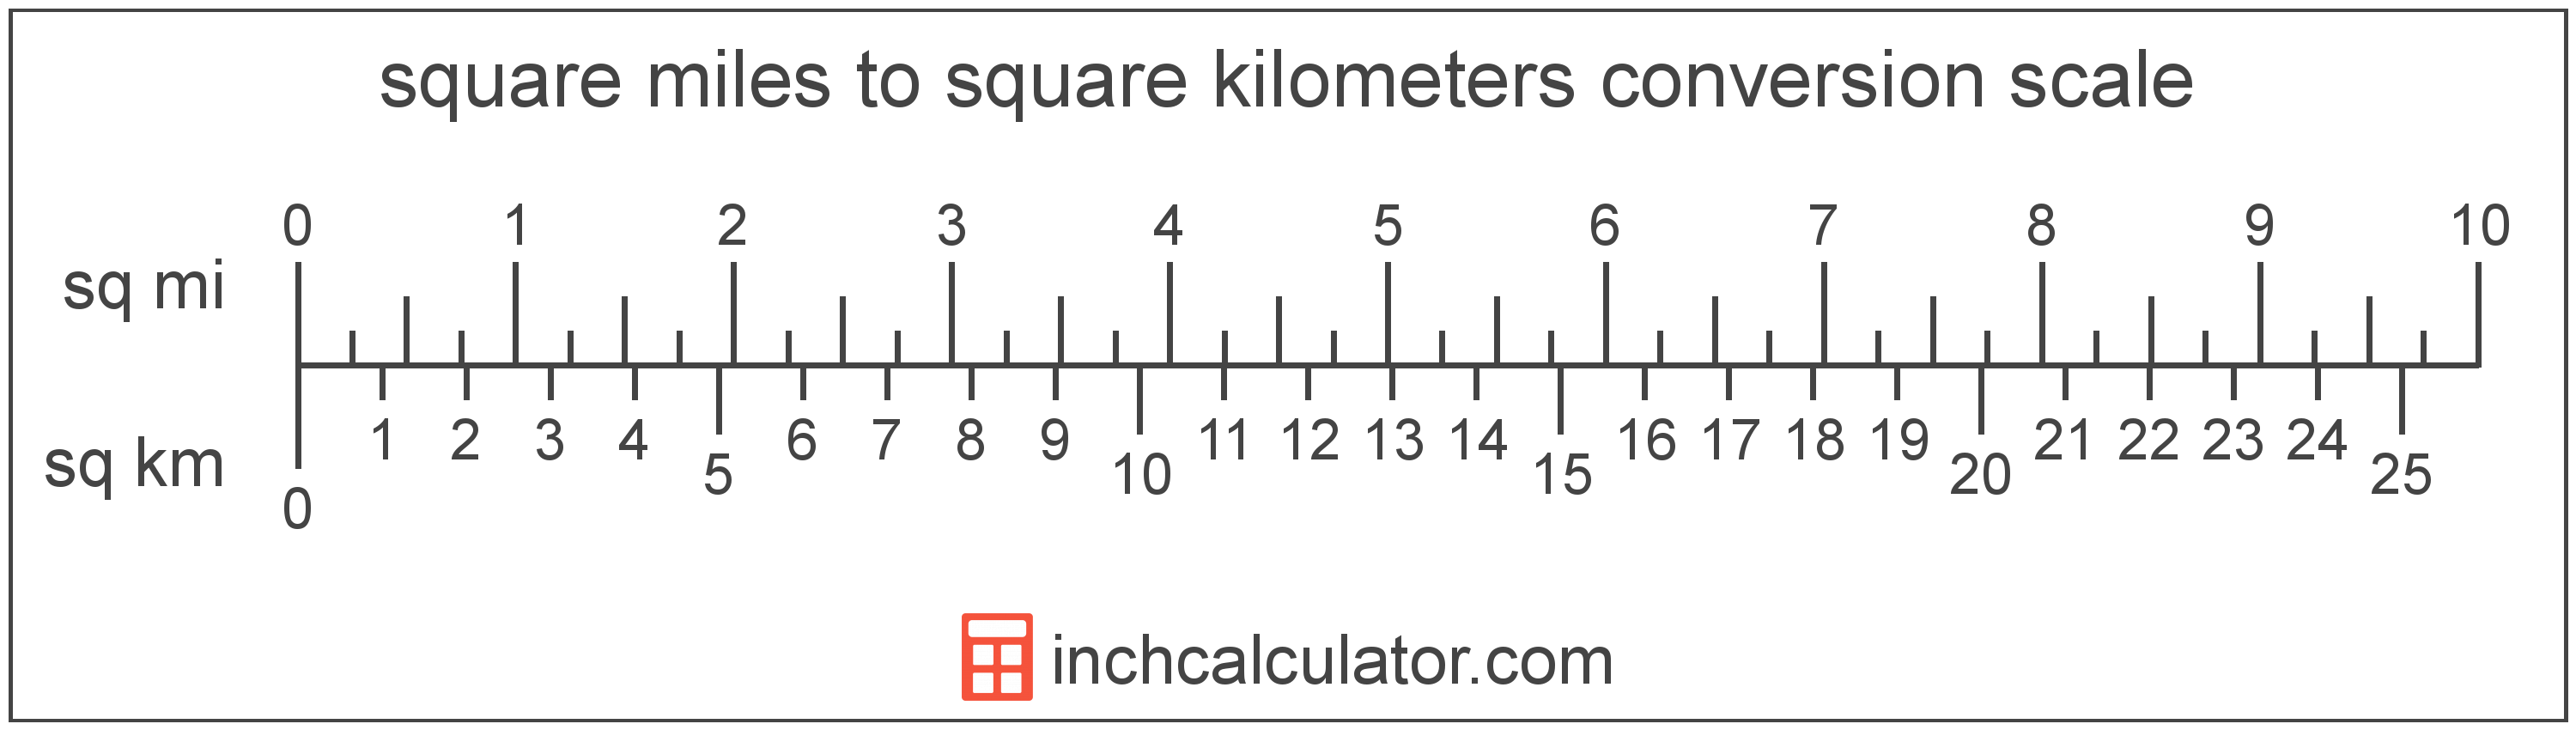 convert-square-kilometers-to-square-miles-sq-km-to-sq-mi